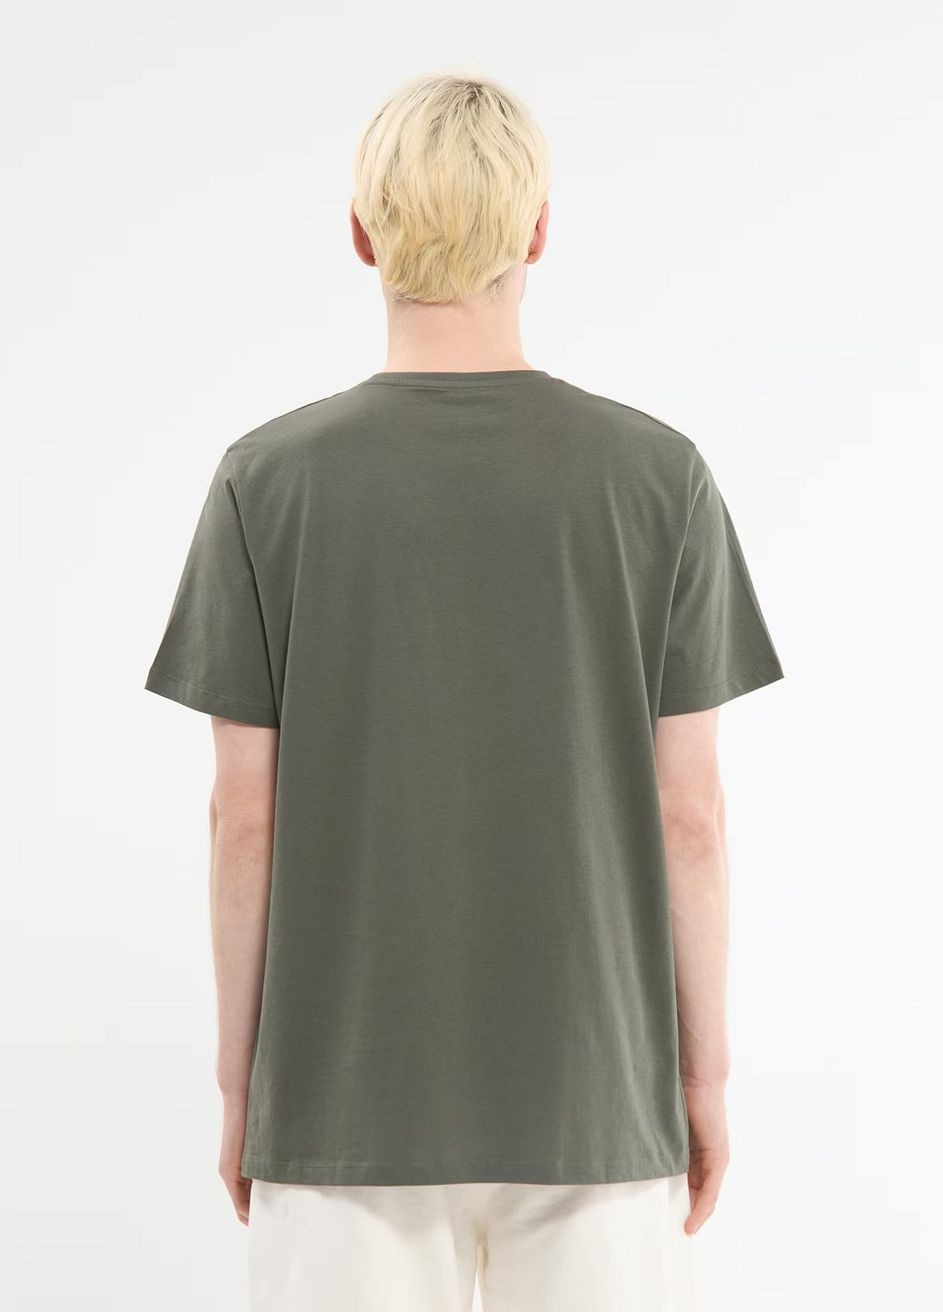 Хаки (оливковая) футболка муж Terranova